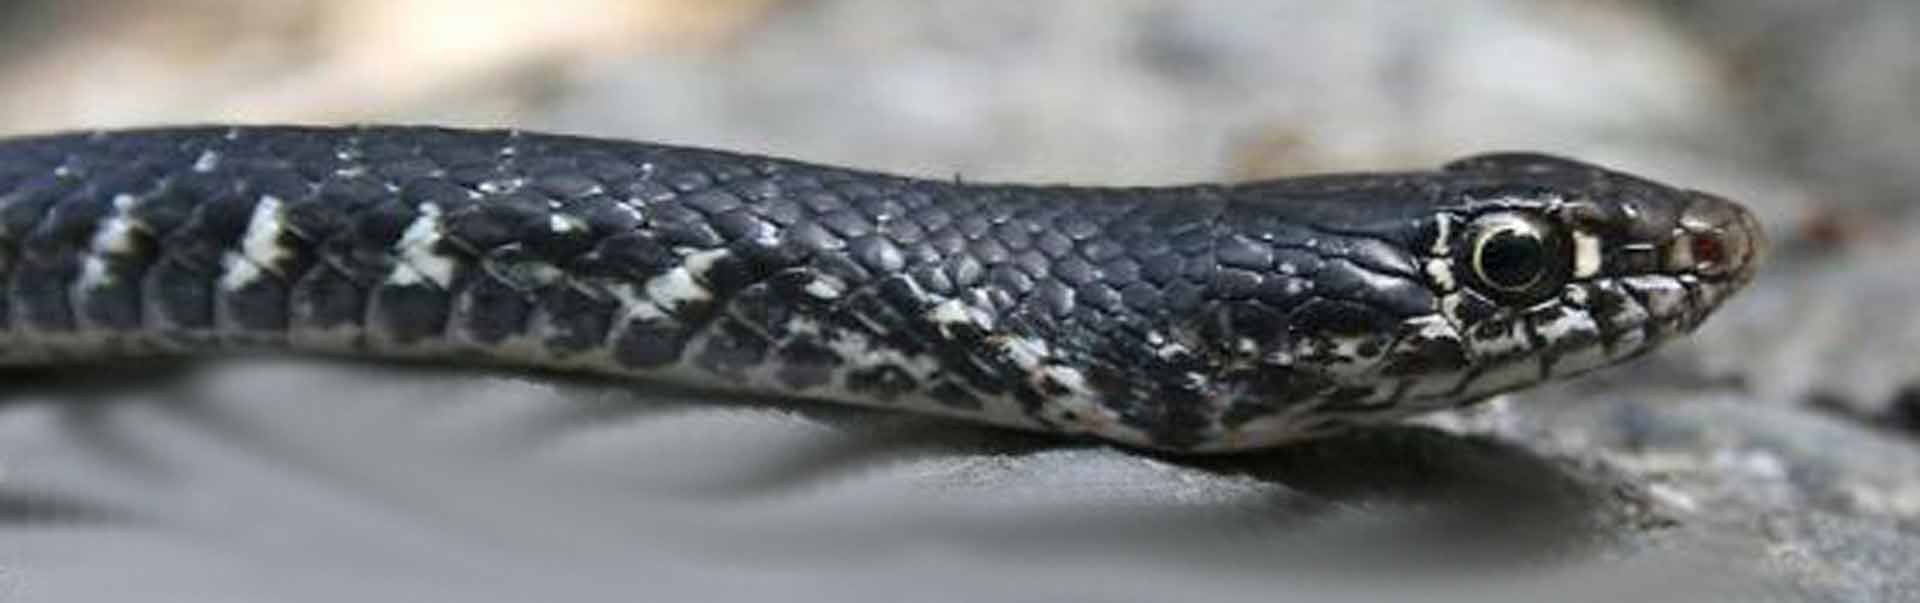 Cyprus Whip Snake - Hierophis Cypriensis